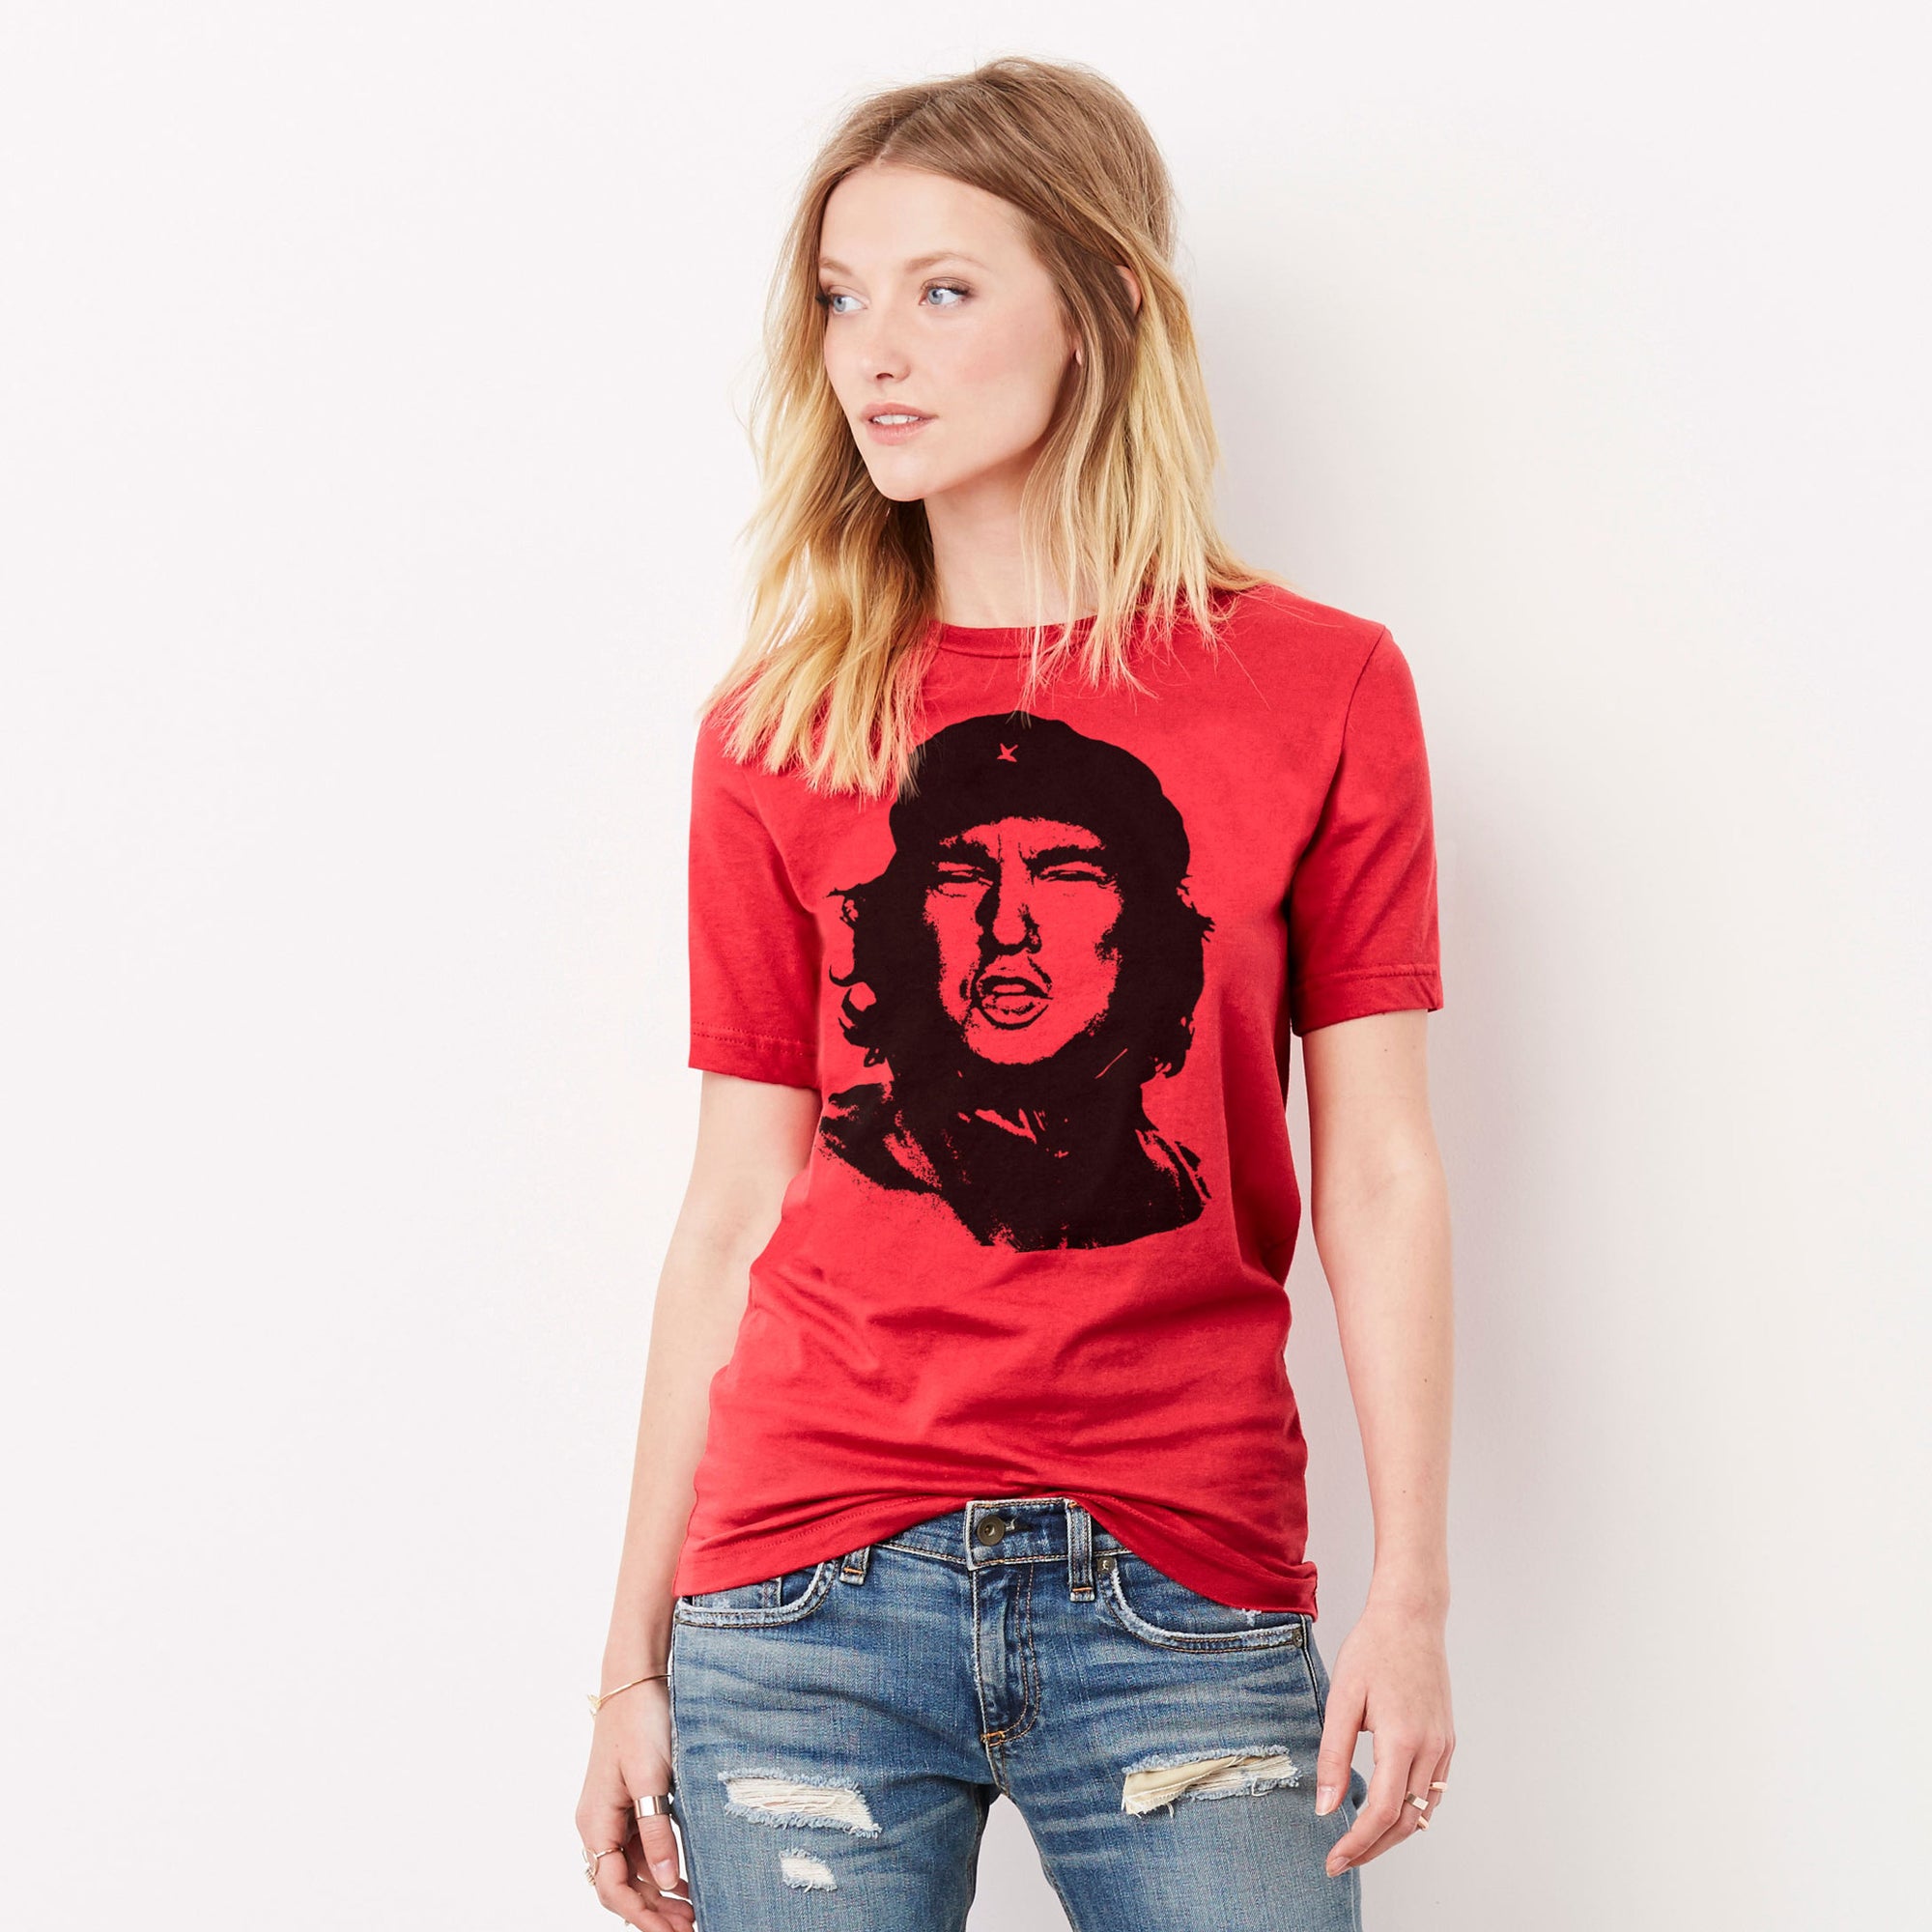 Trump Che shirt on 5'8" female - size medium